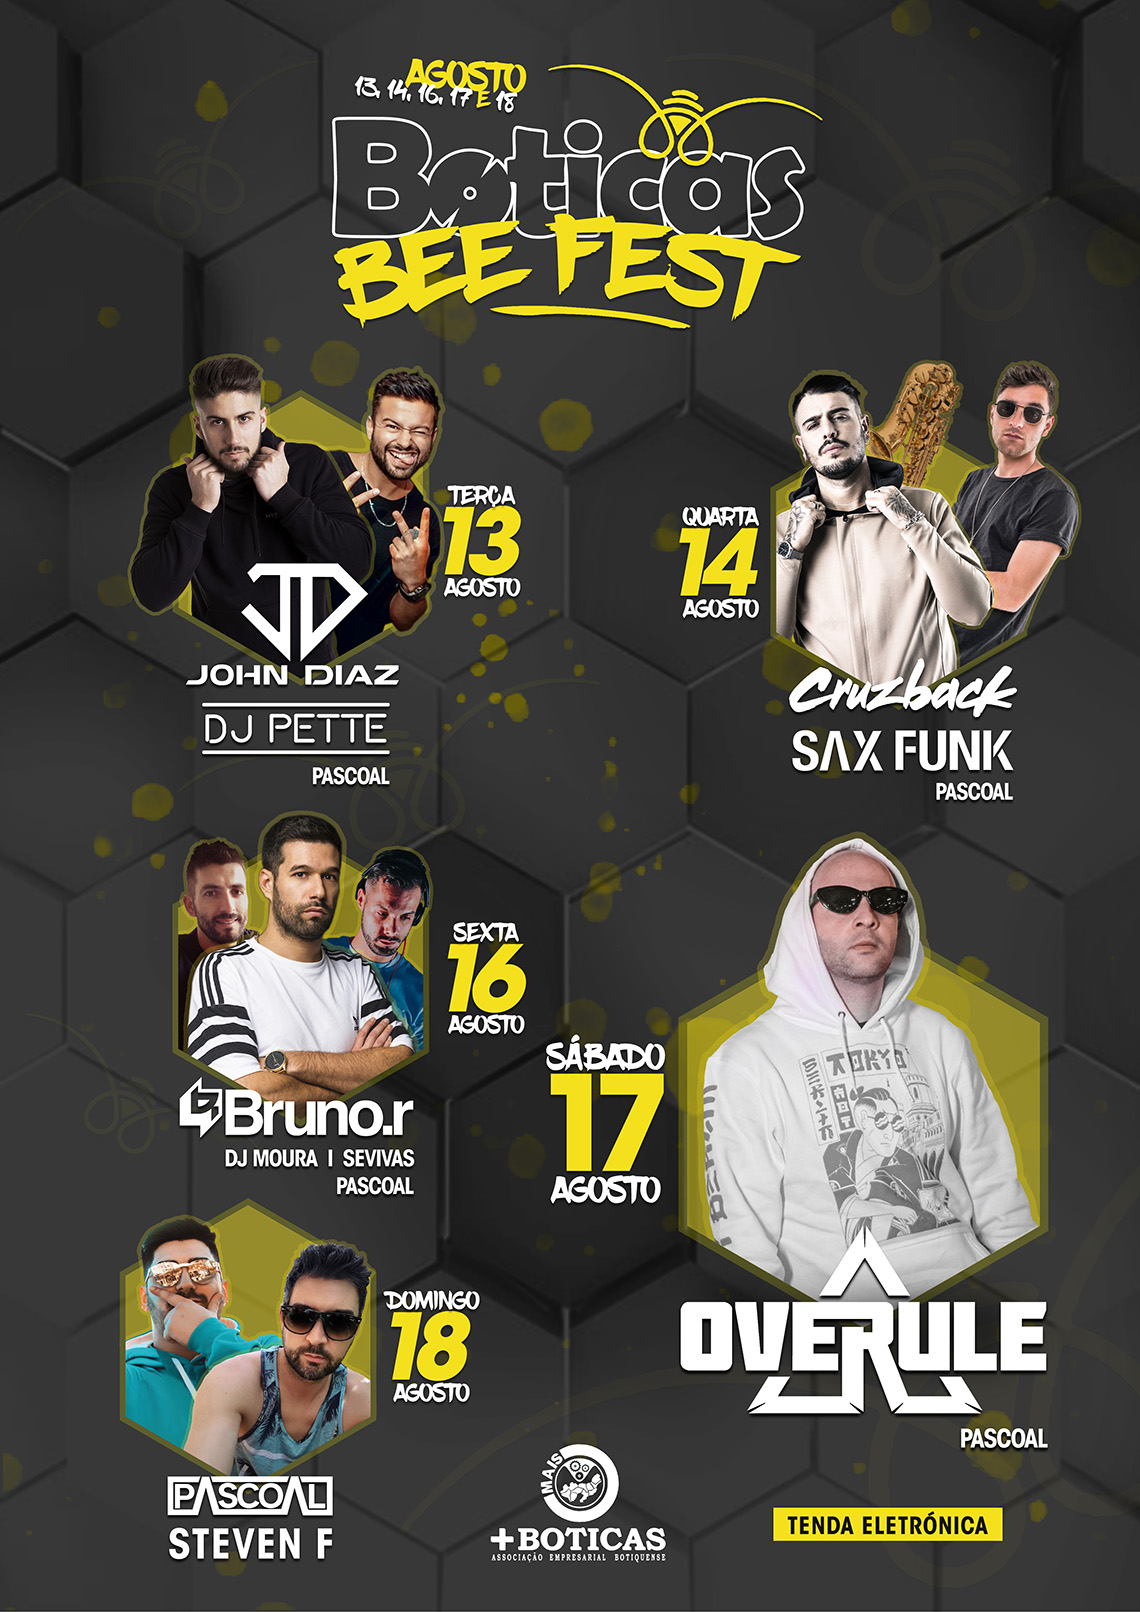 Boticas Bee Fest